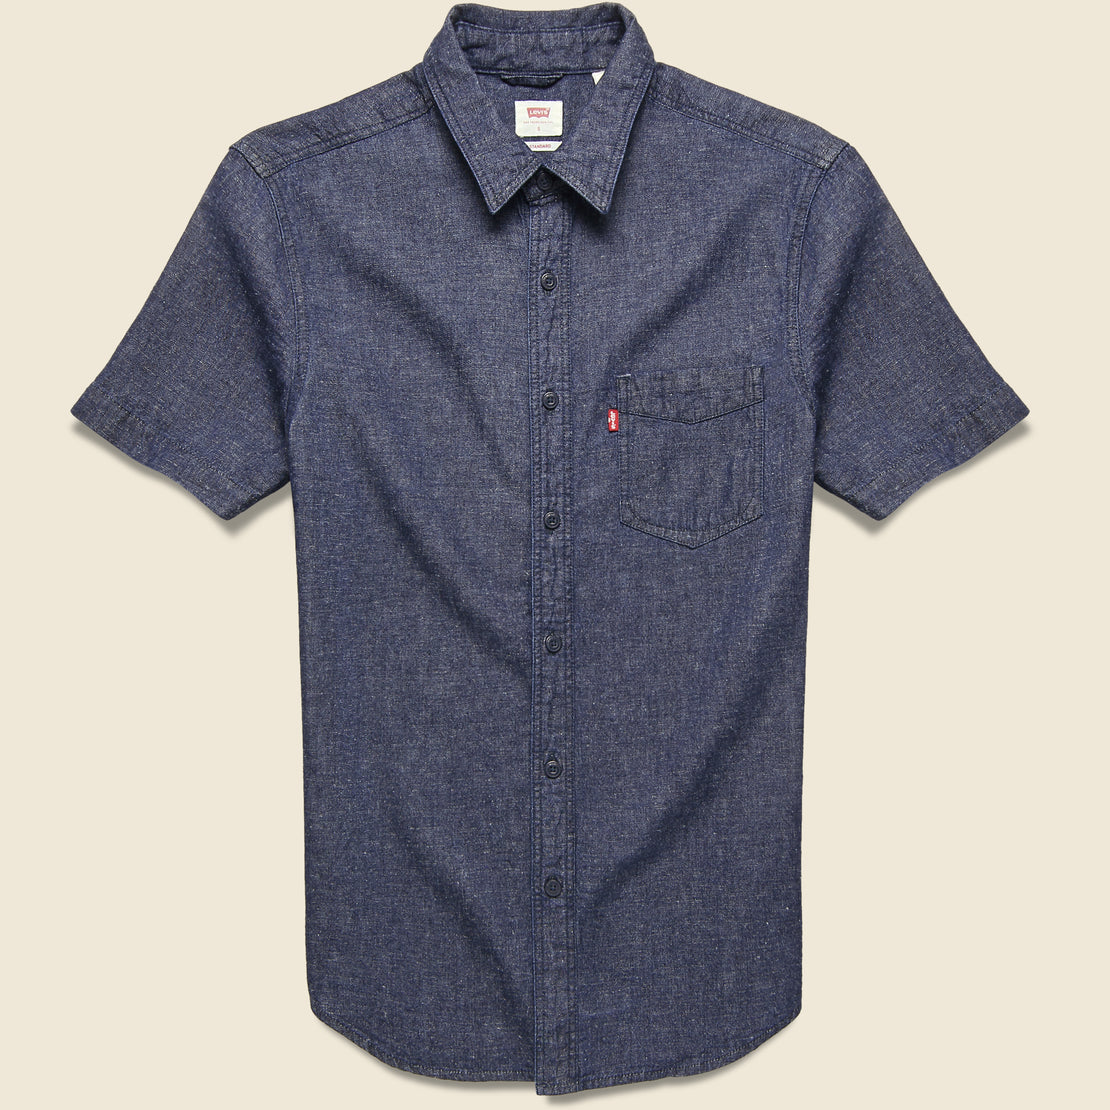 Levis Premium Sunset 1-Pocket Standard Shirt - Hemp Rinse